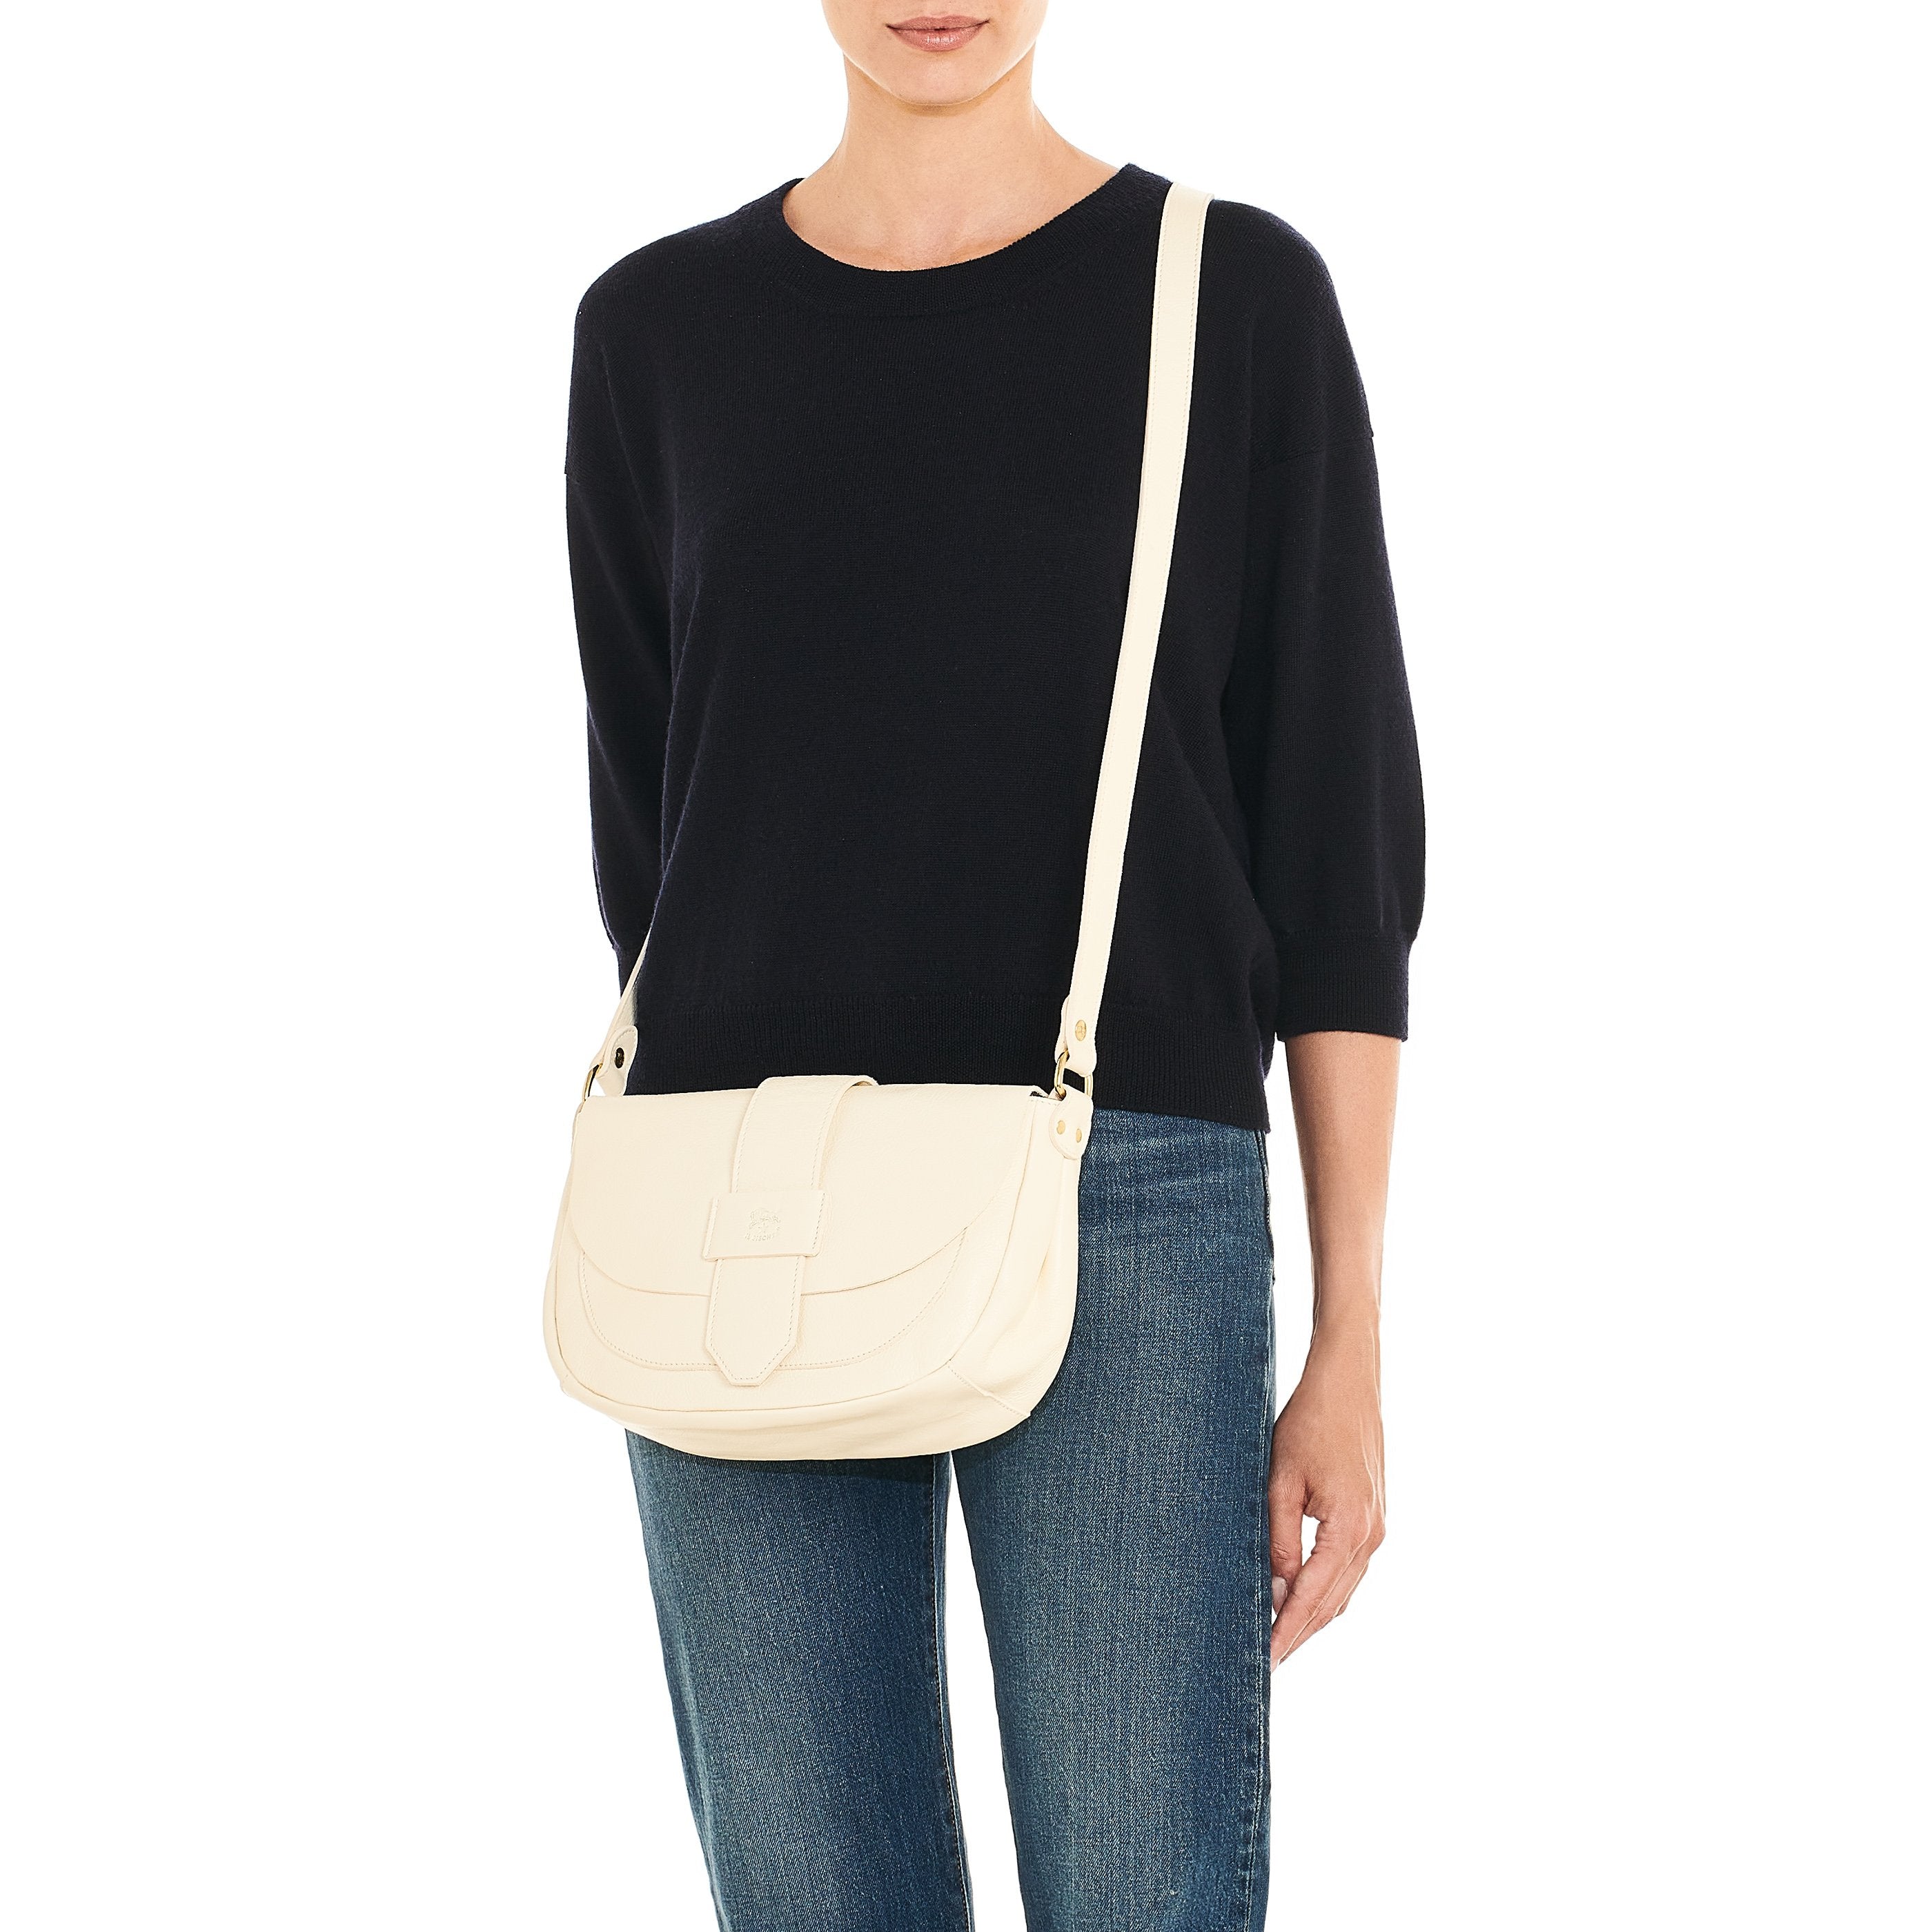 Fausta Medium | Women's crossbody bag in leather color milk